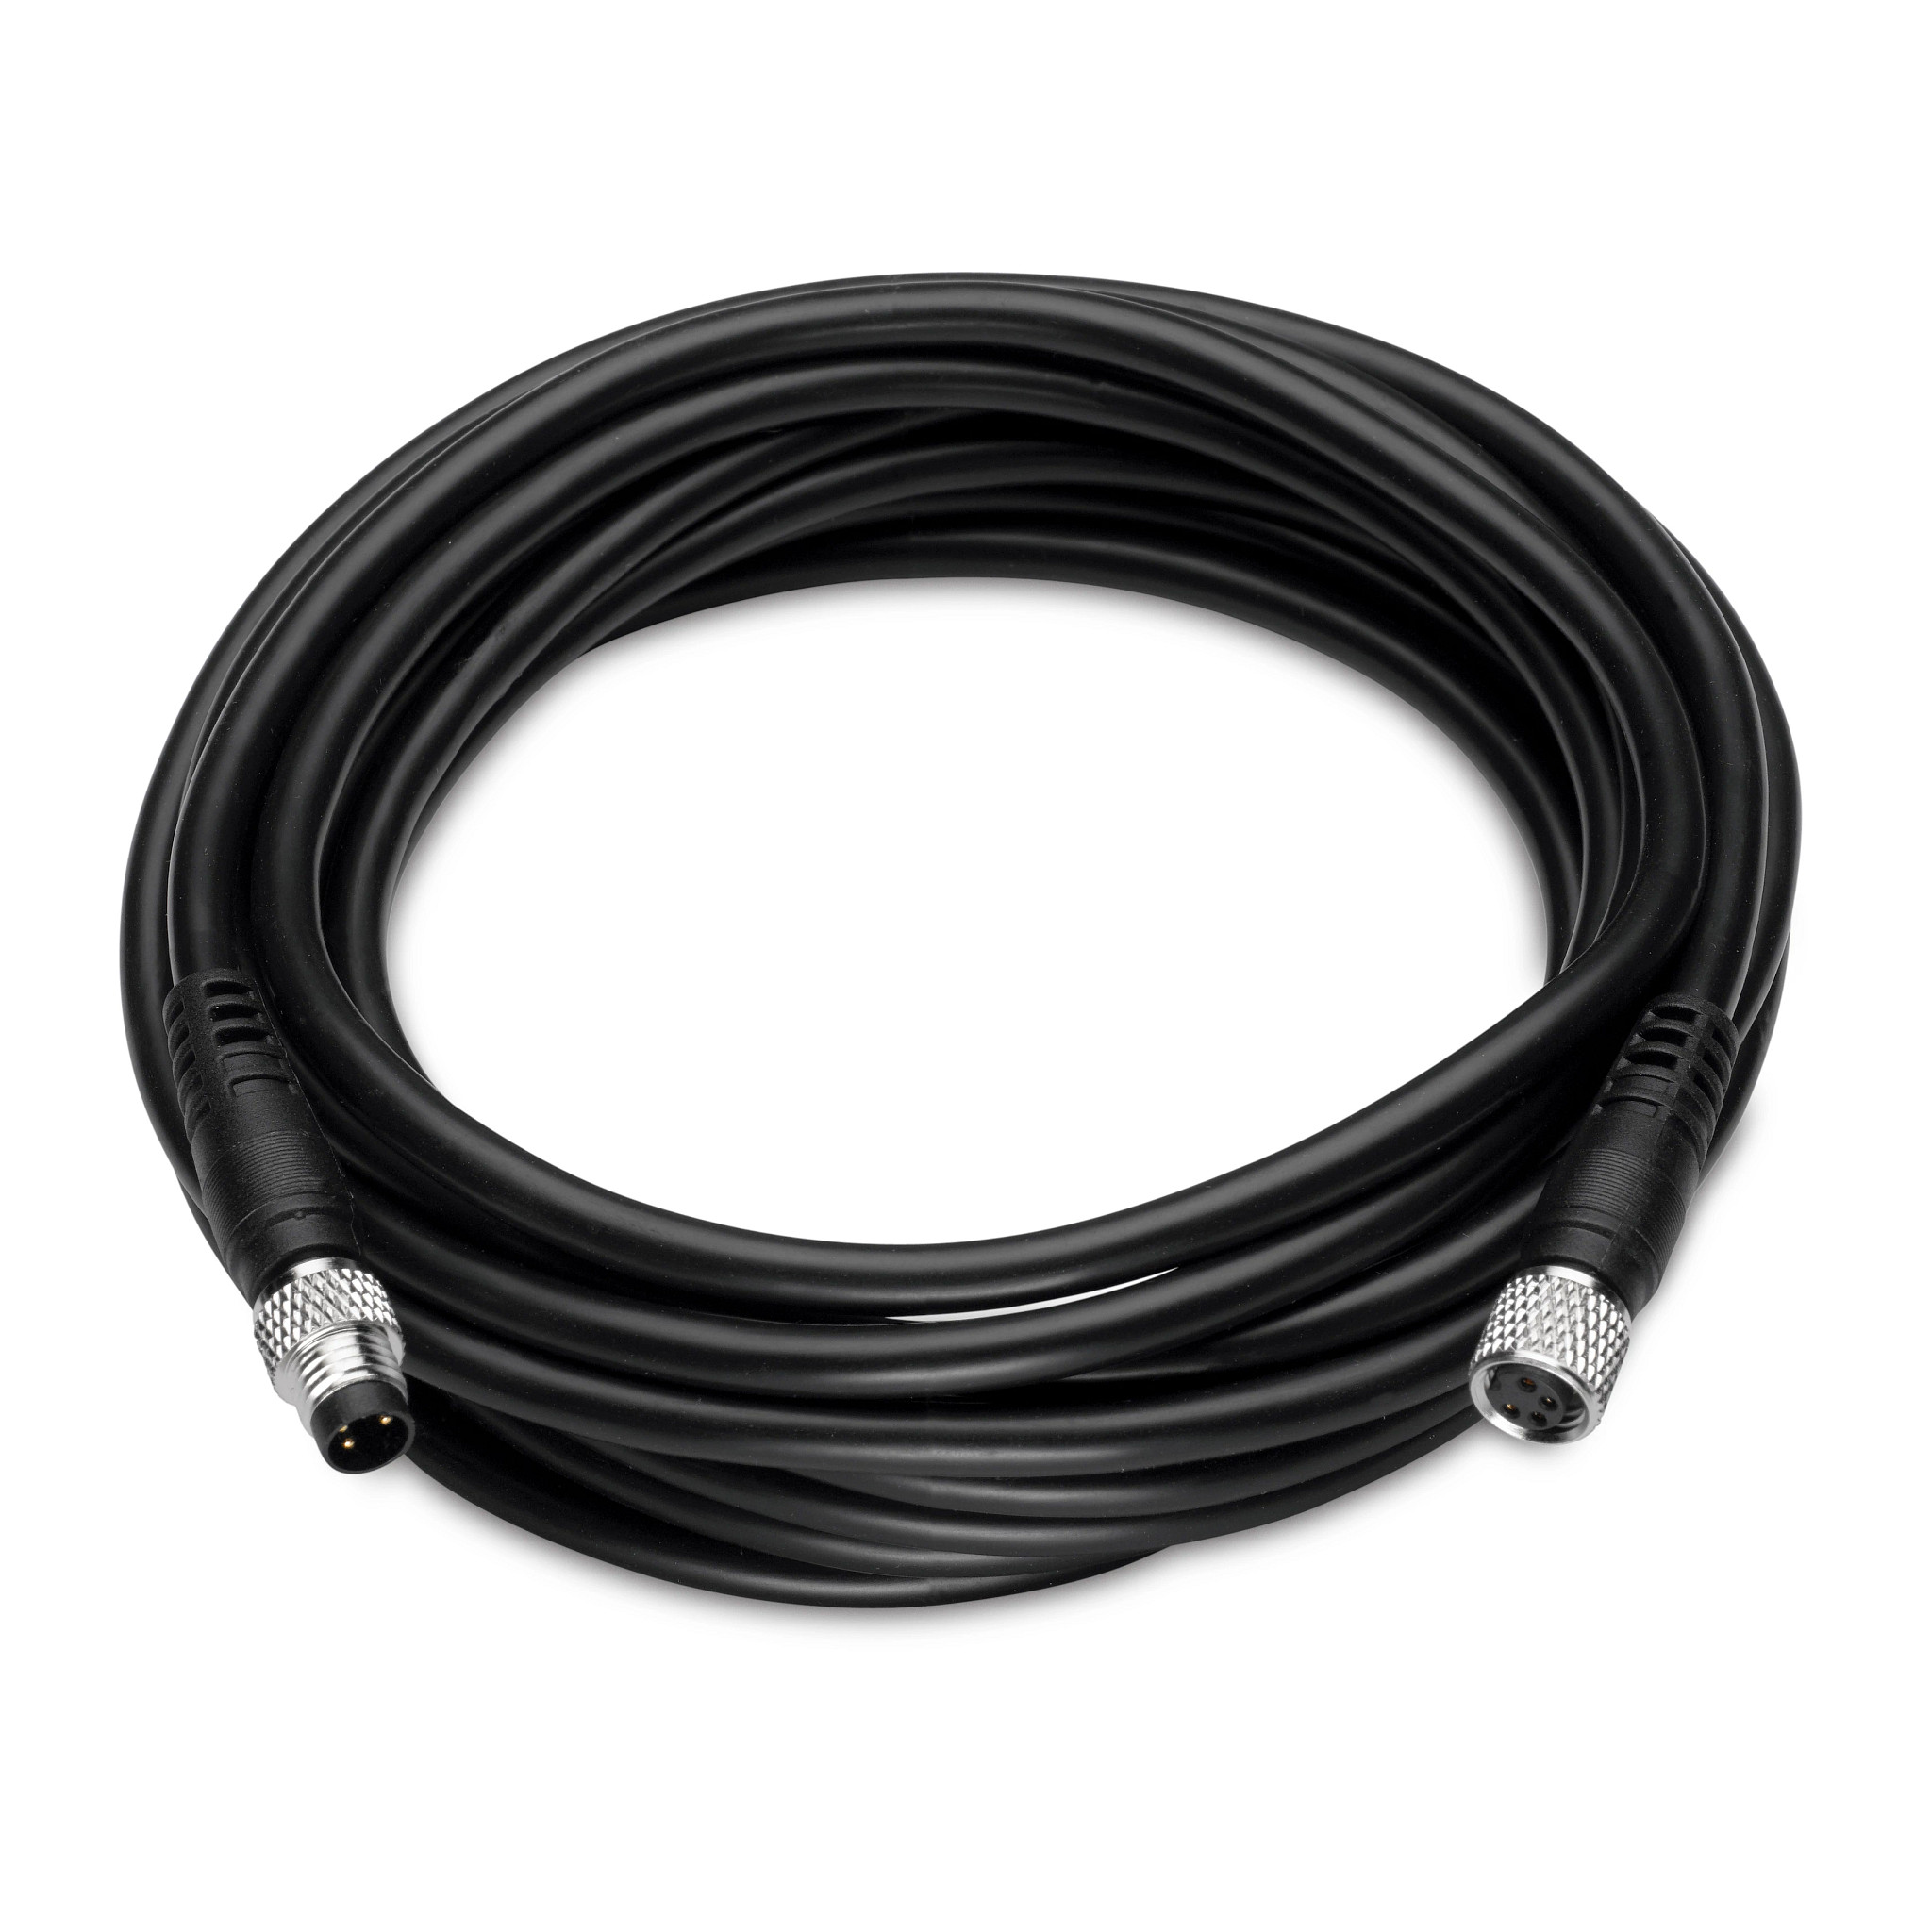 Minn Kota MKR-US2-14 Garmin 8-Pin Adapter Cable 